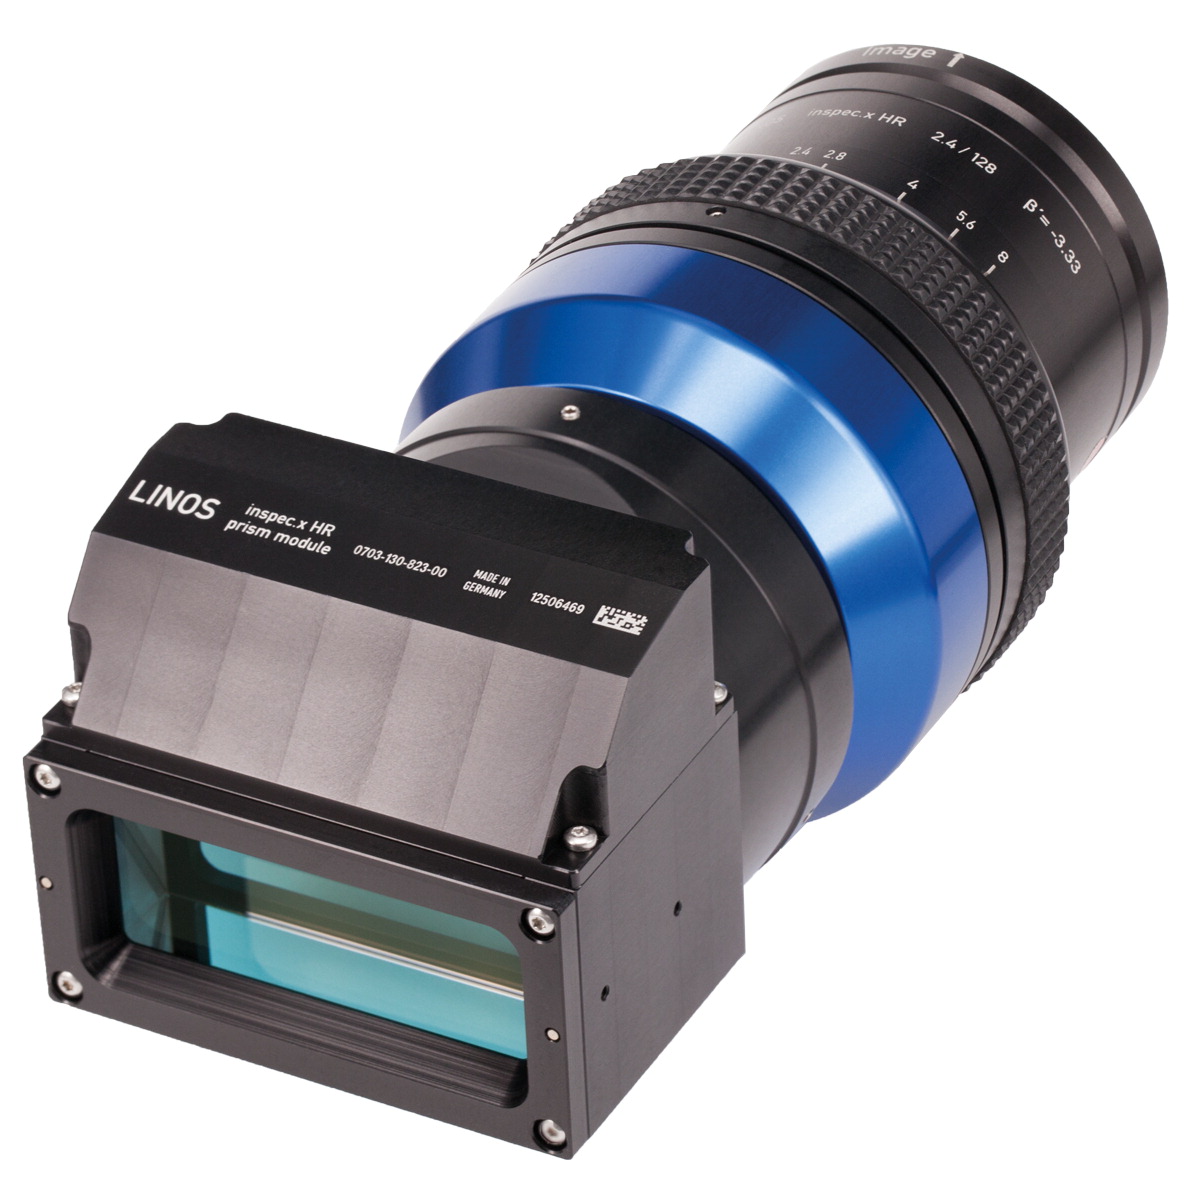 Qioptiq an Excelitas Technologies company introduces its inspecx HR 24128 333x lens